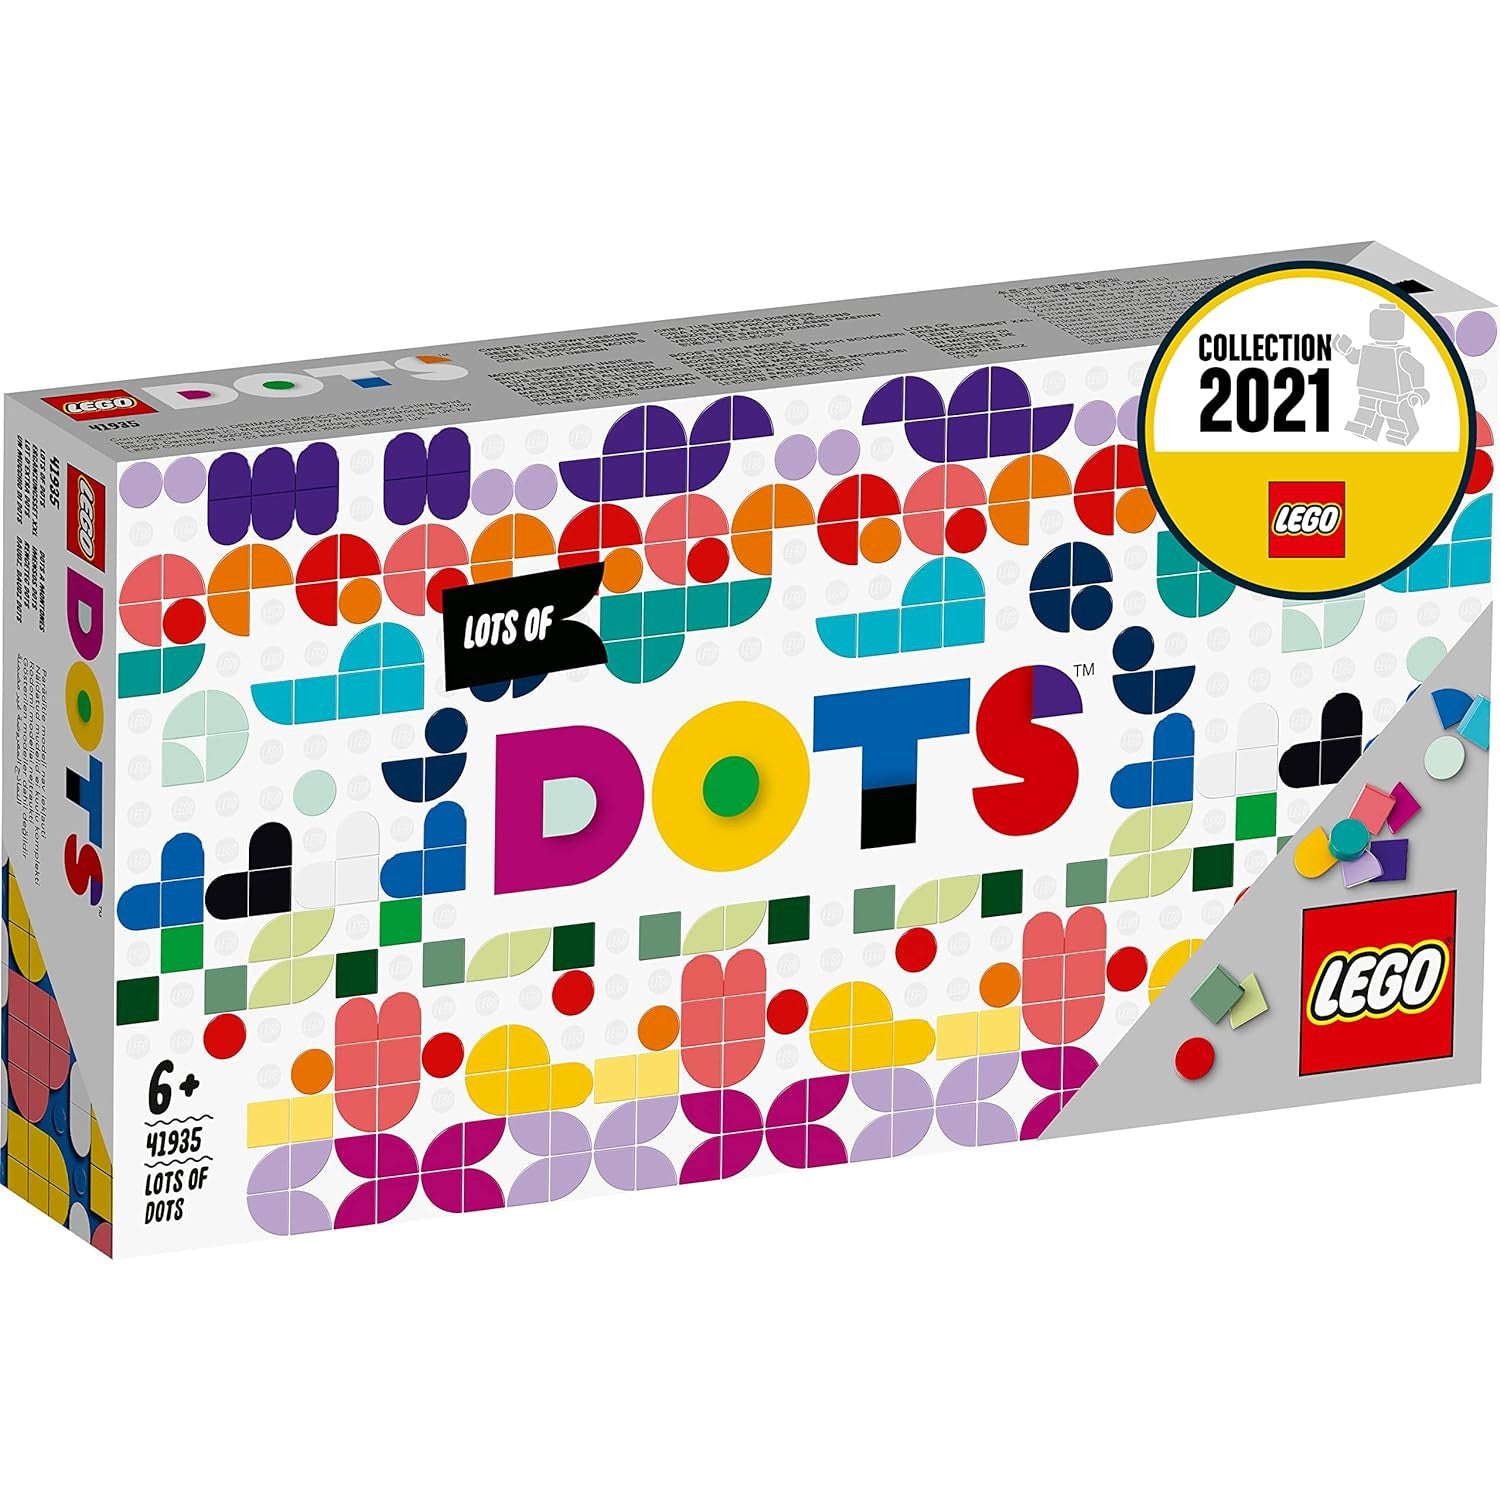 Lego 41935 DOTS Lots of DOTS